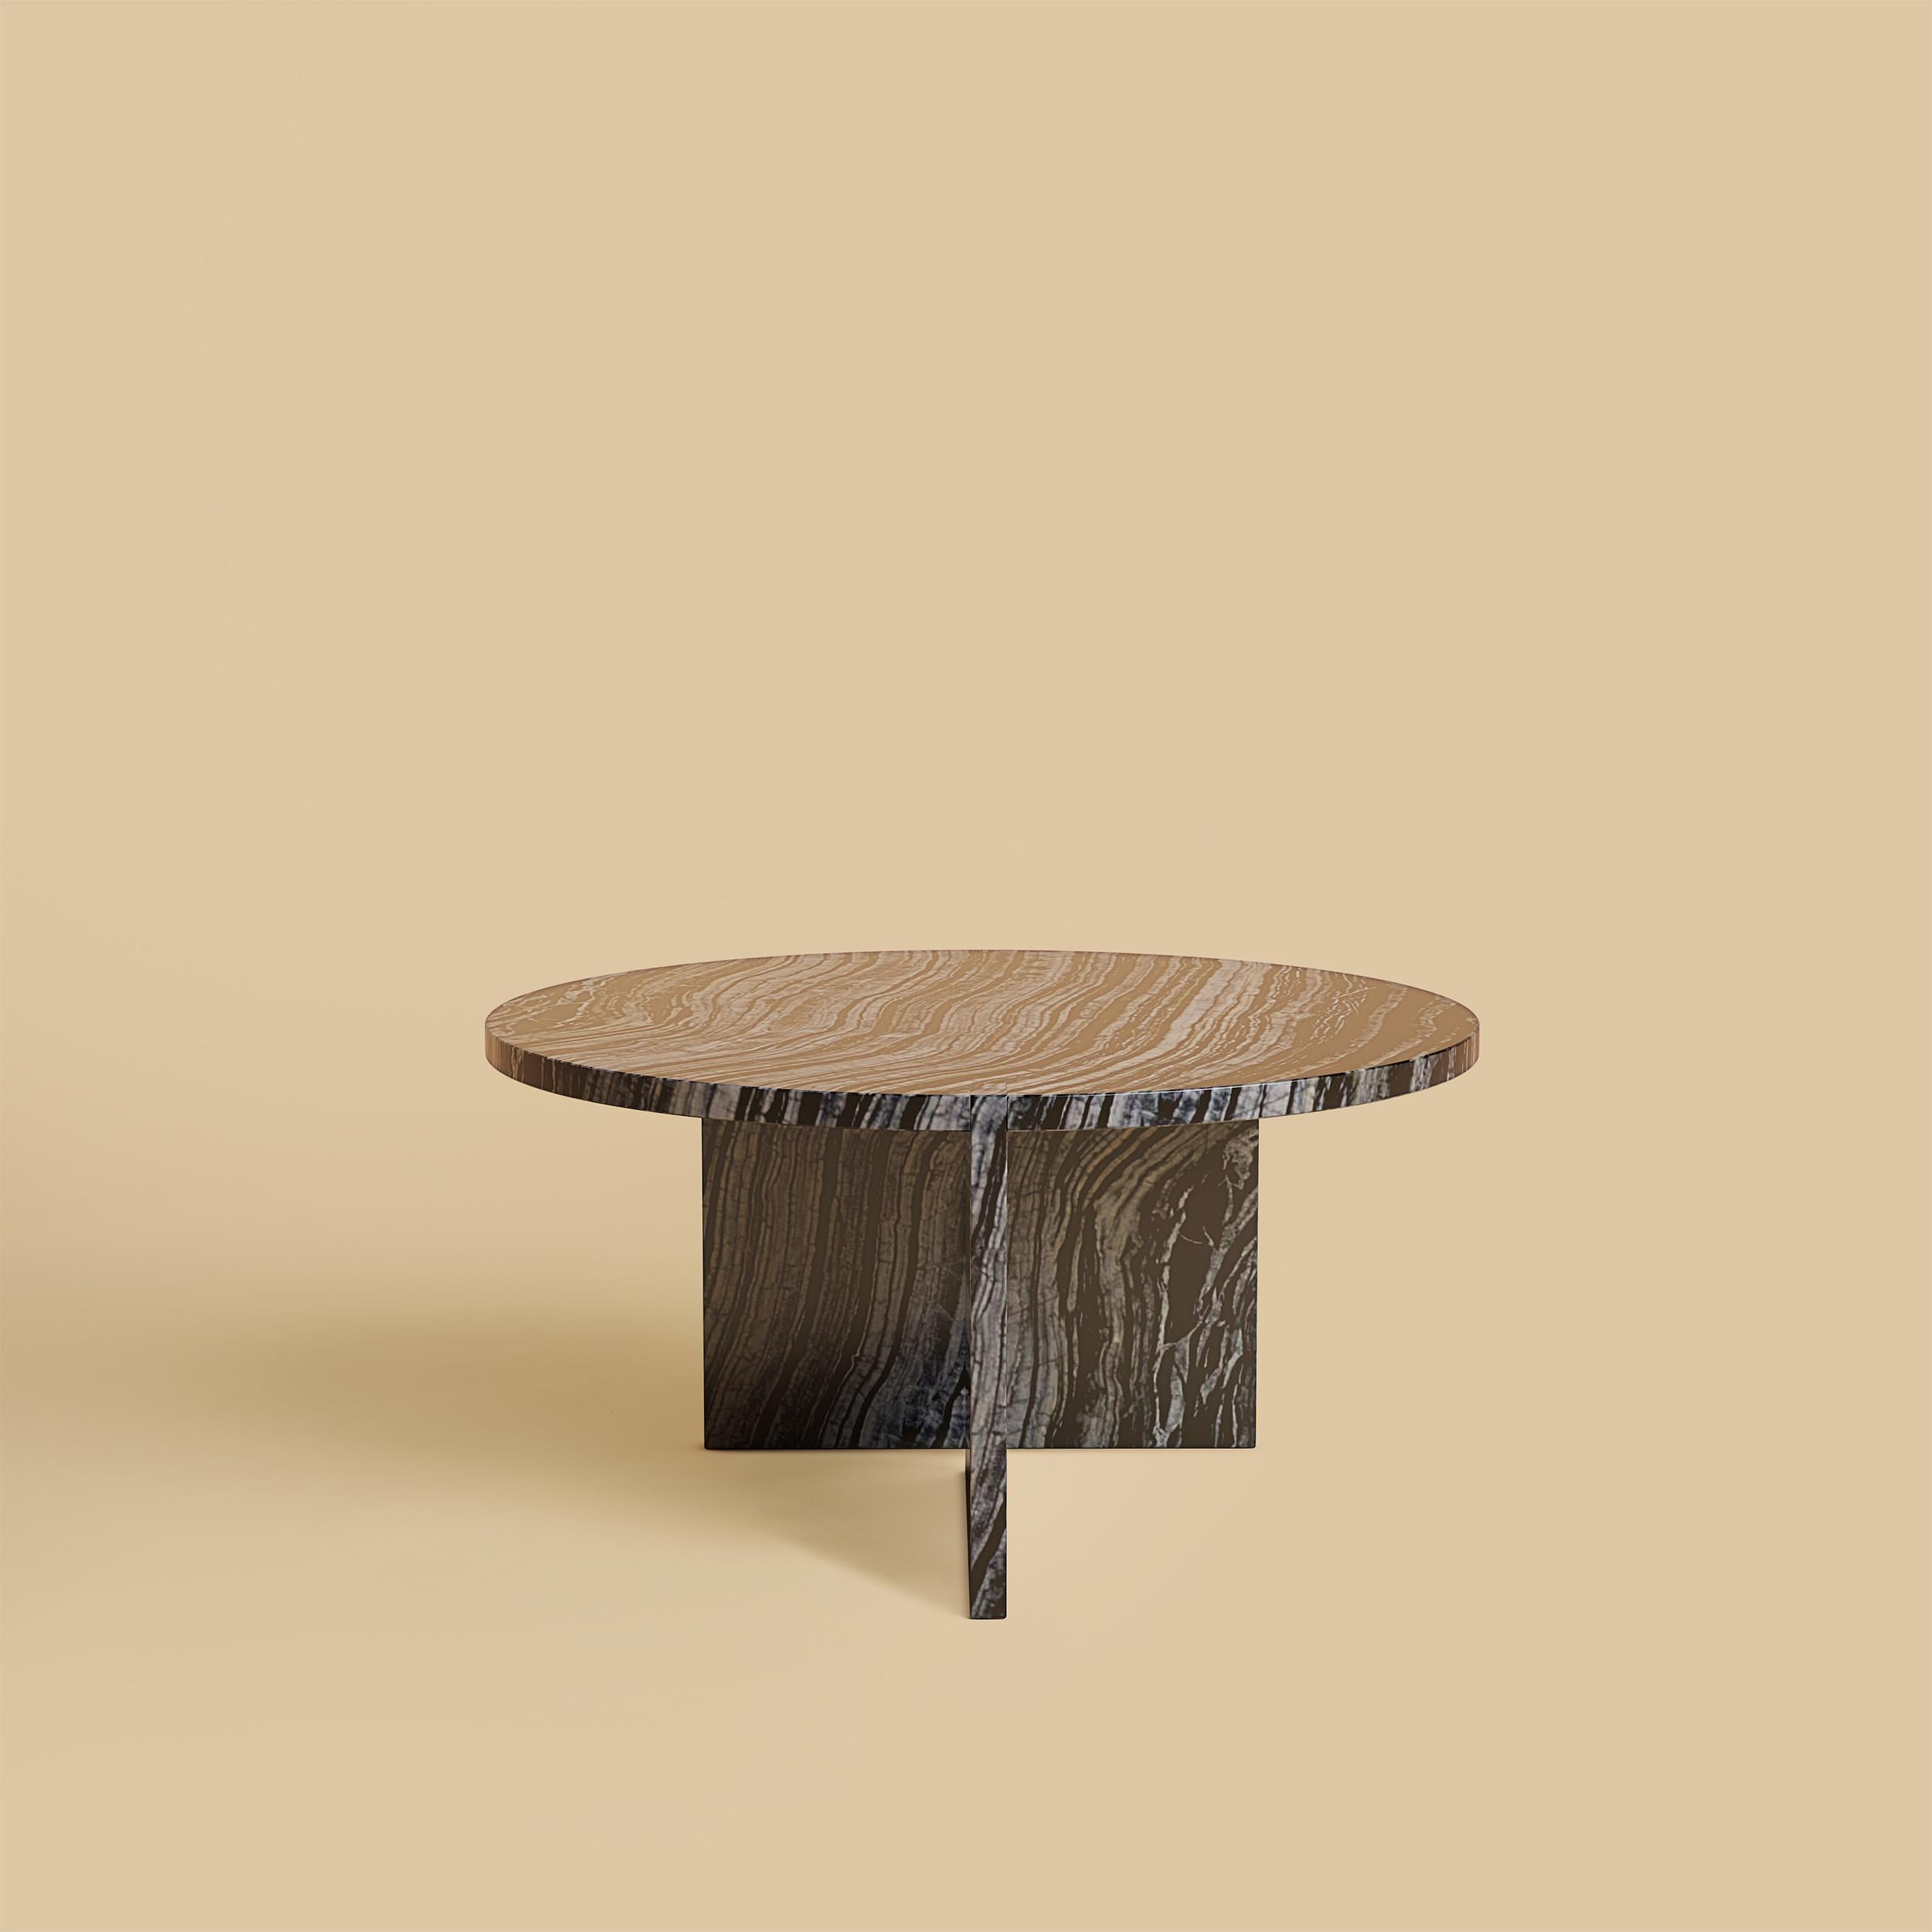 Moderne Table basse ronde en marbre noir du Kenya, fabriquée en Italie en vente